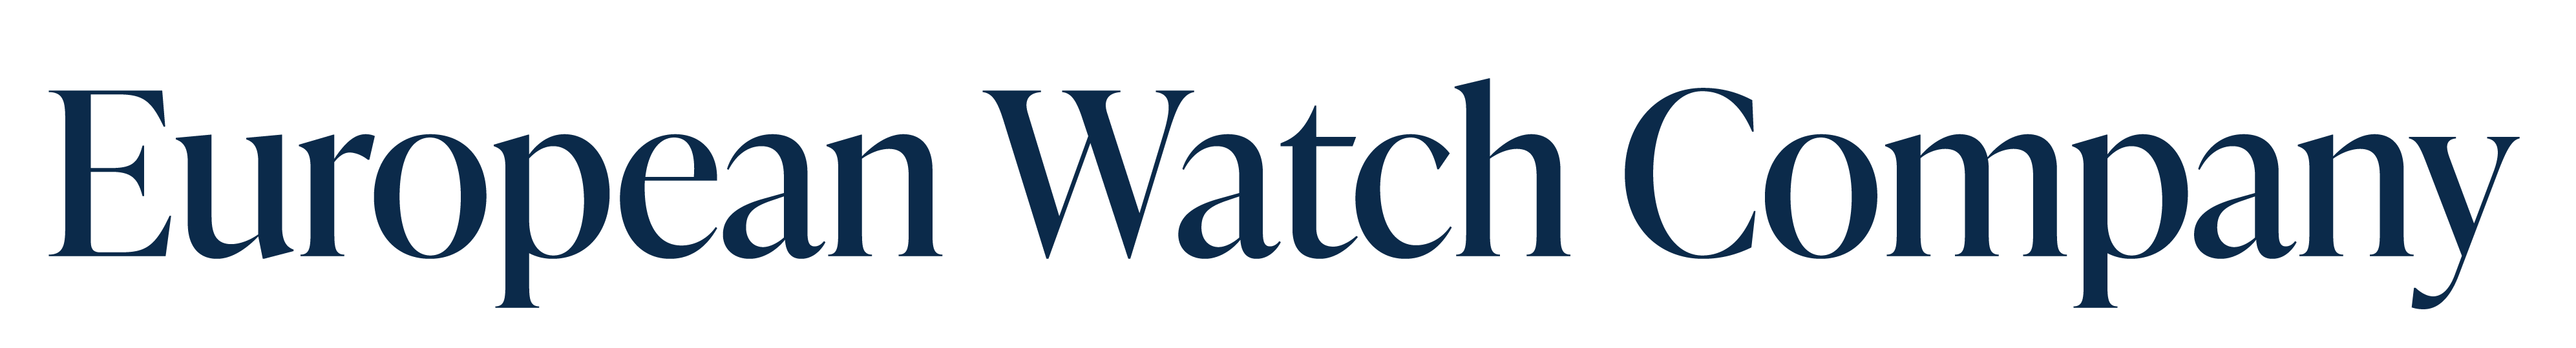 European Watch Company Logo